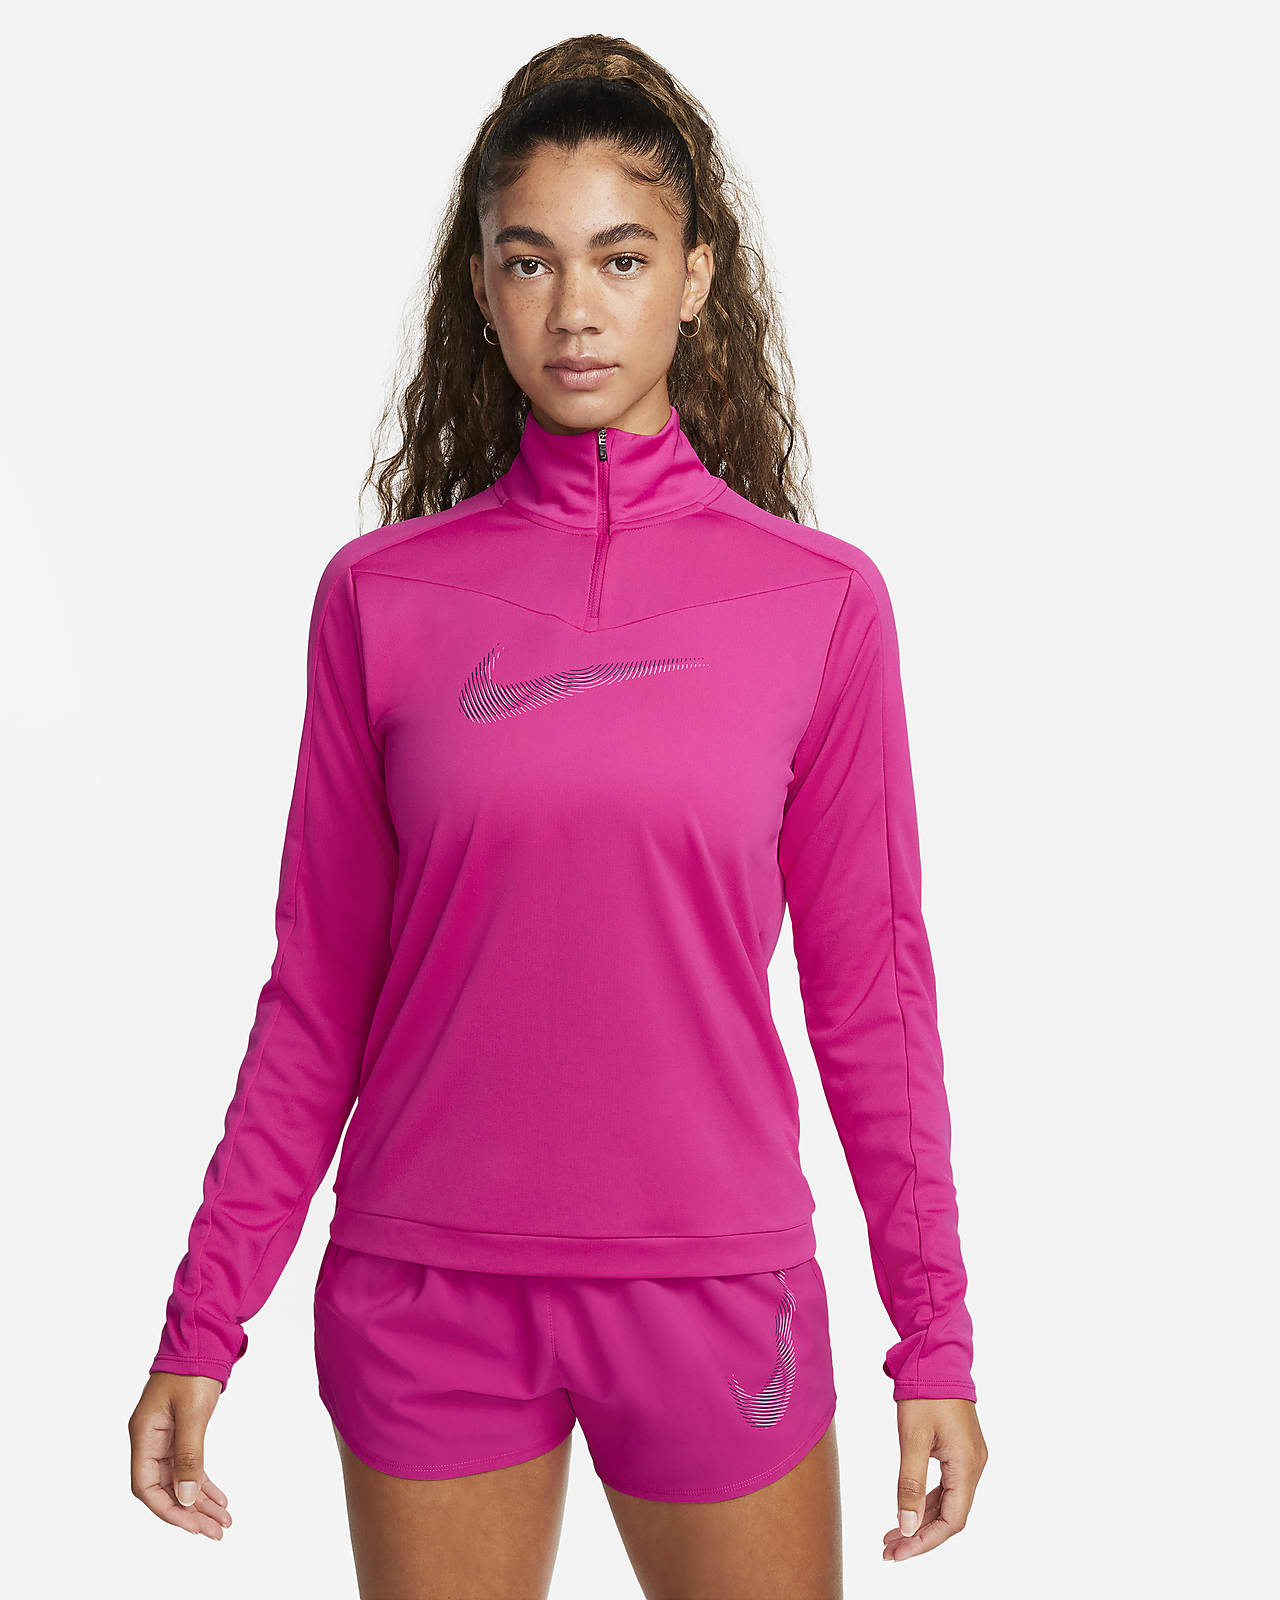 Jogging woman Nike Dri-Fit Power classic - Nike - Brands - Beach